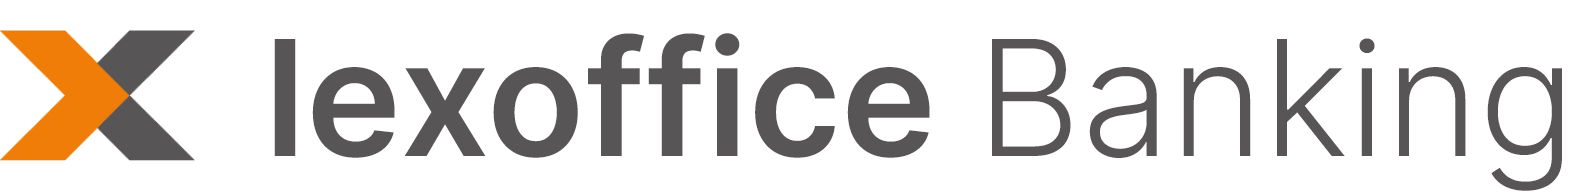 lexoffice-Banking-Logo